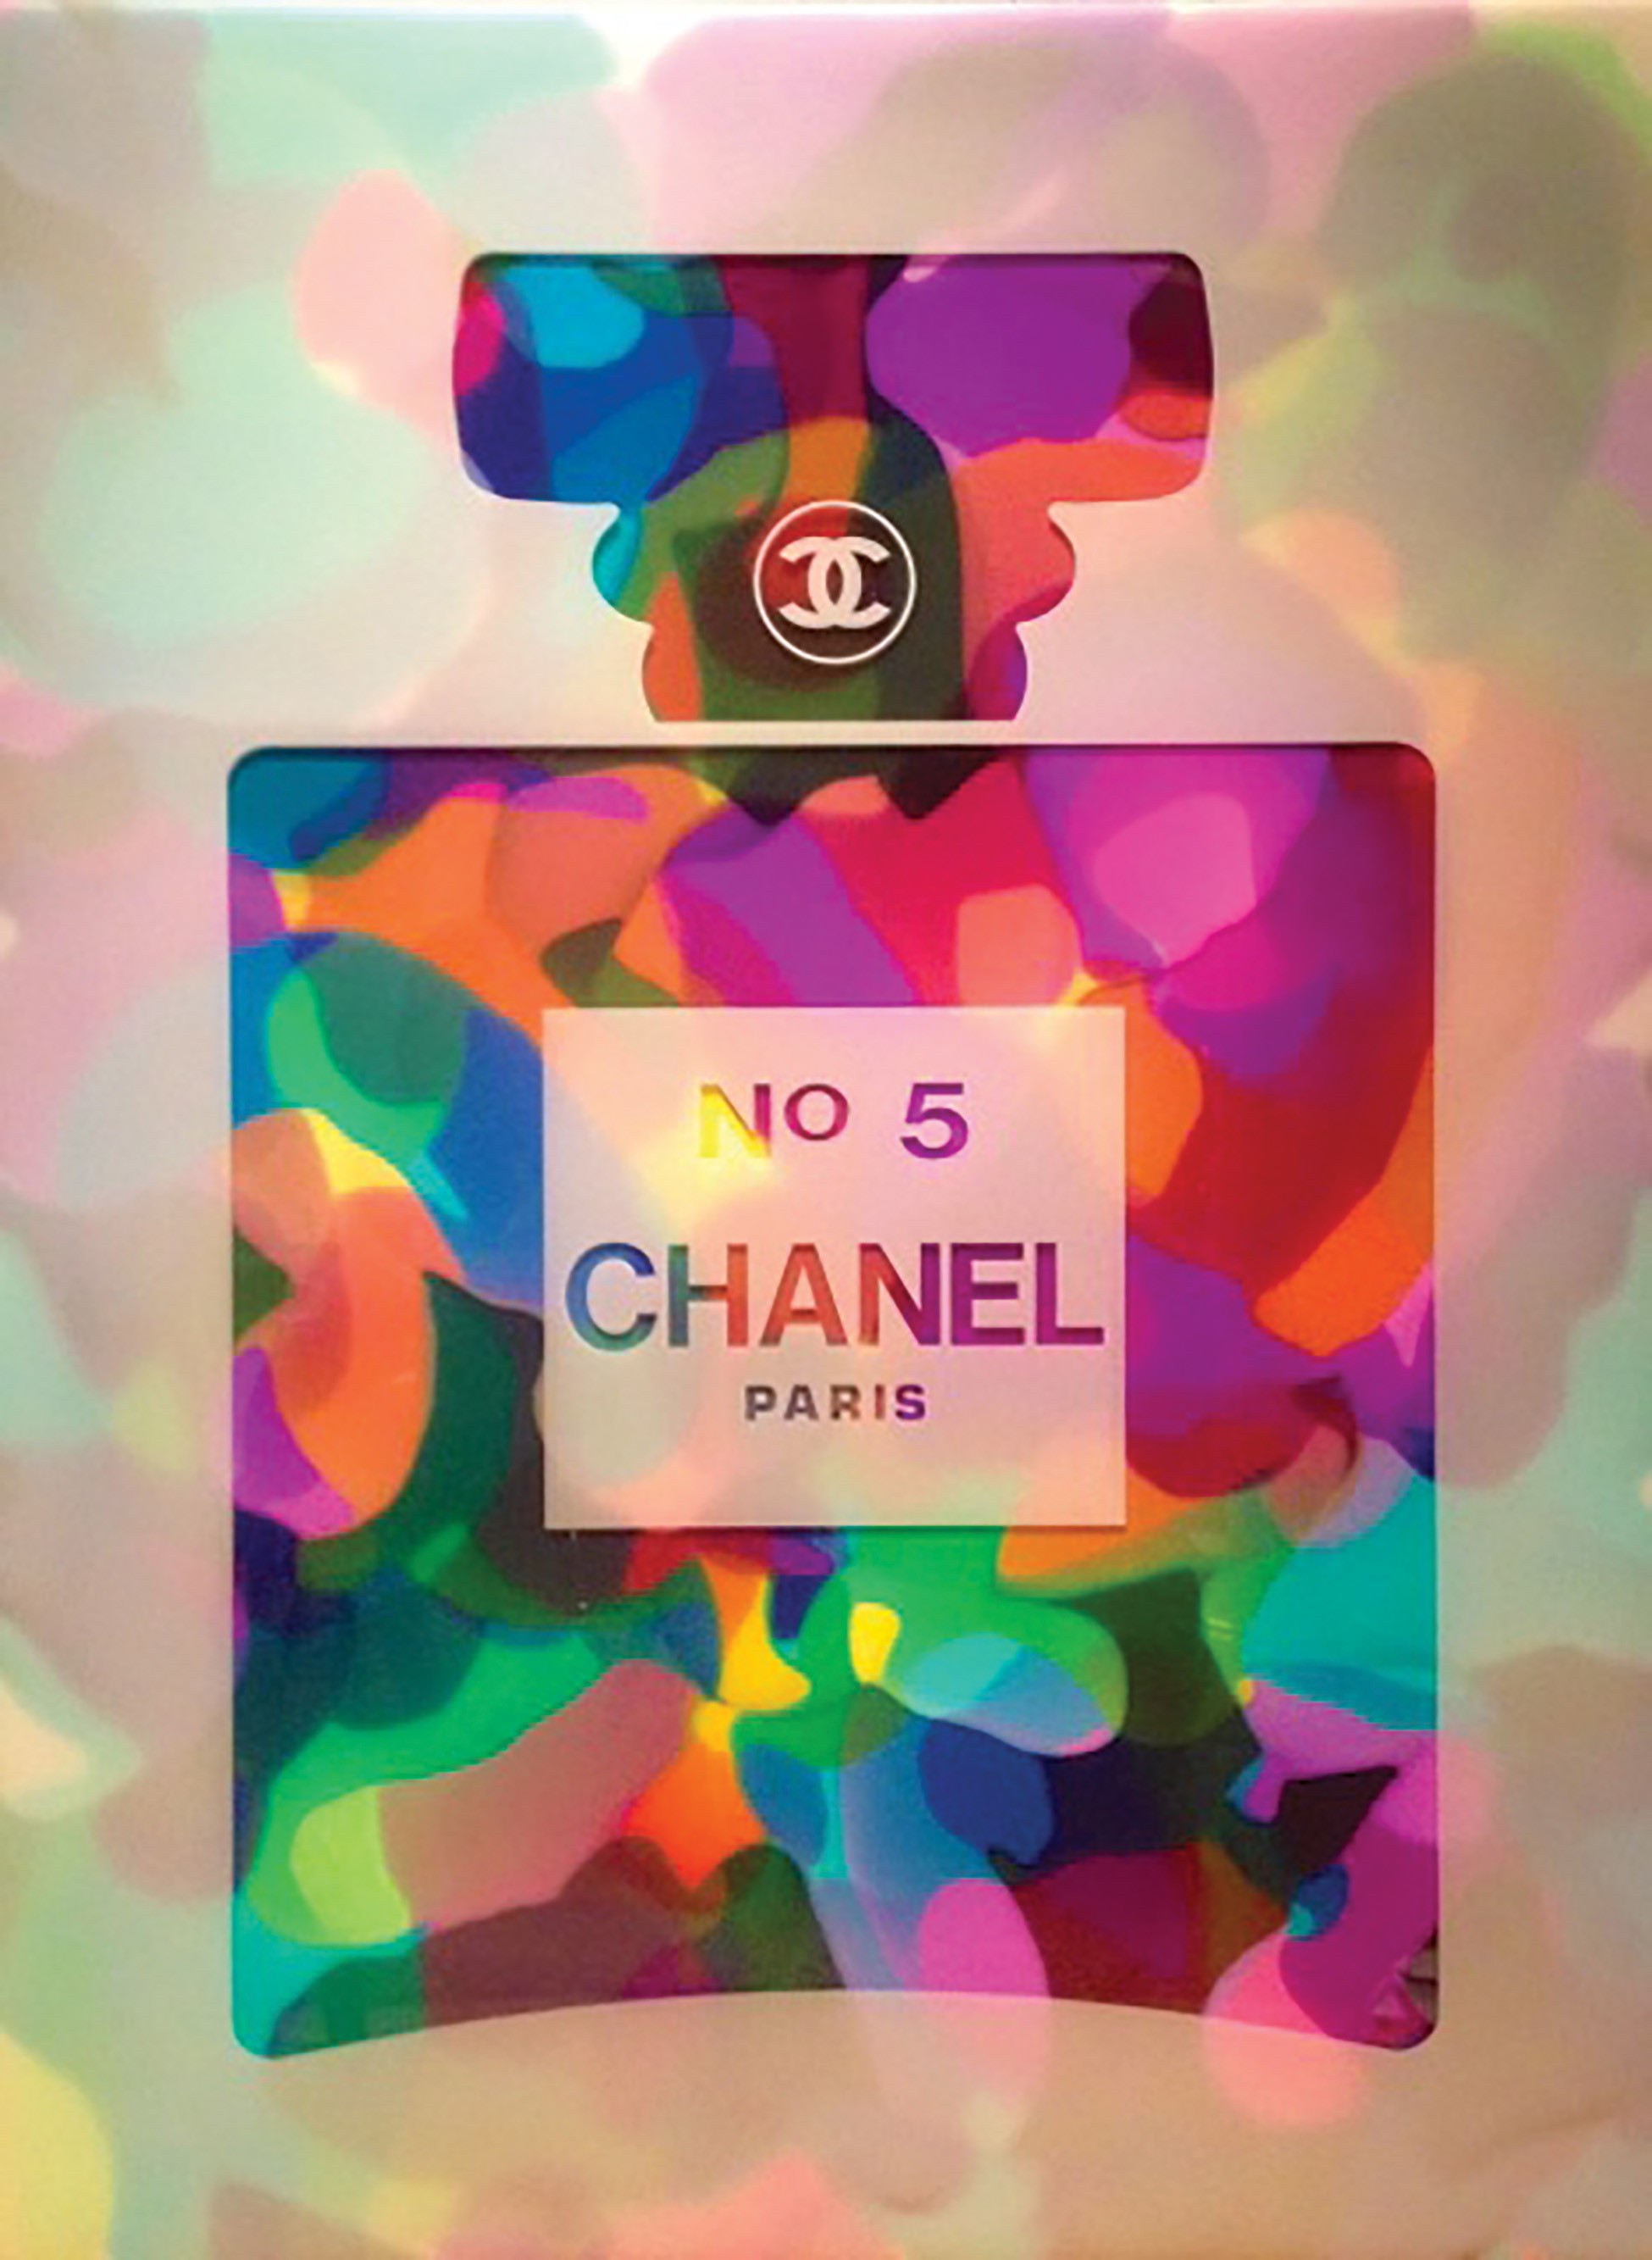 "Chanel" by Alberto Murillo